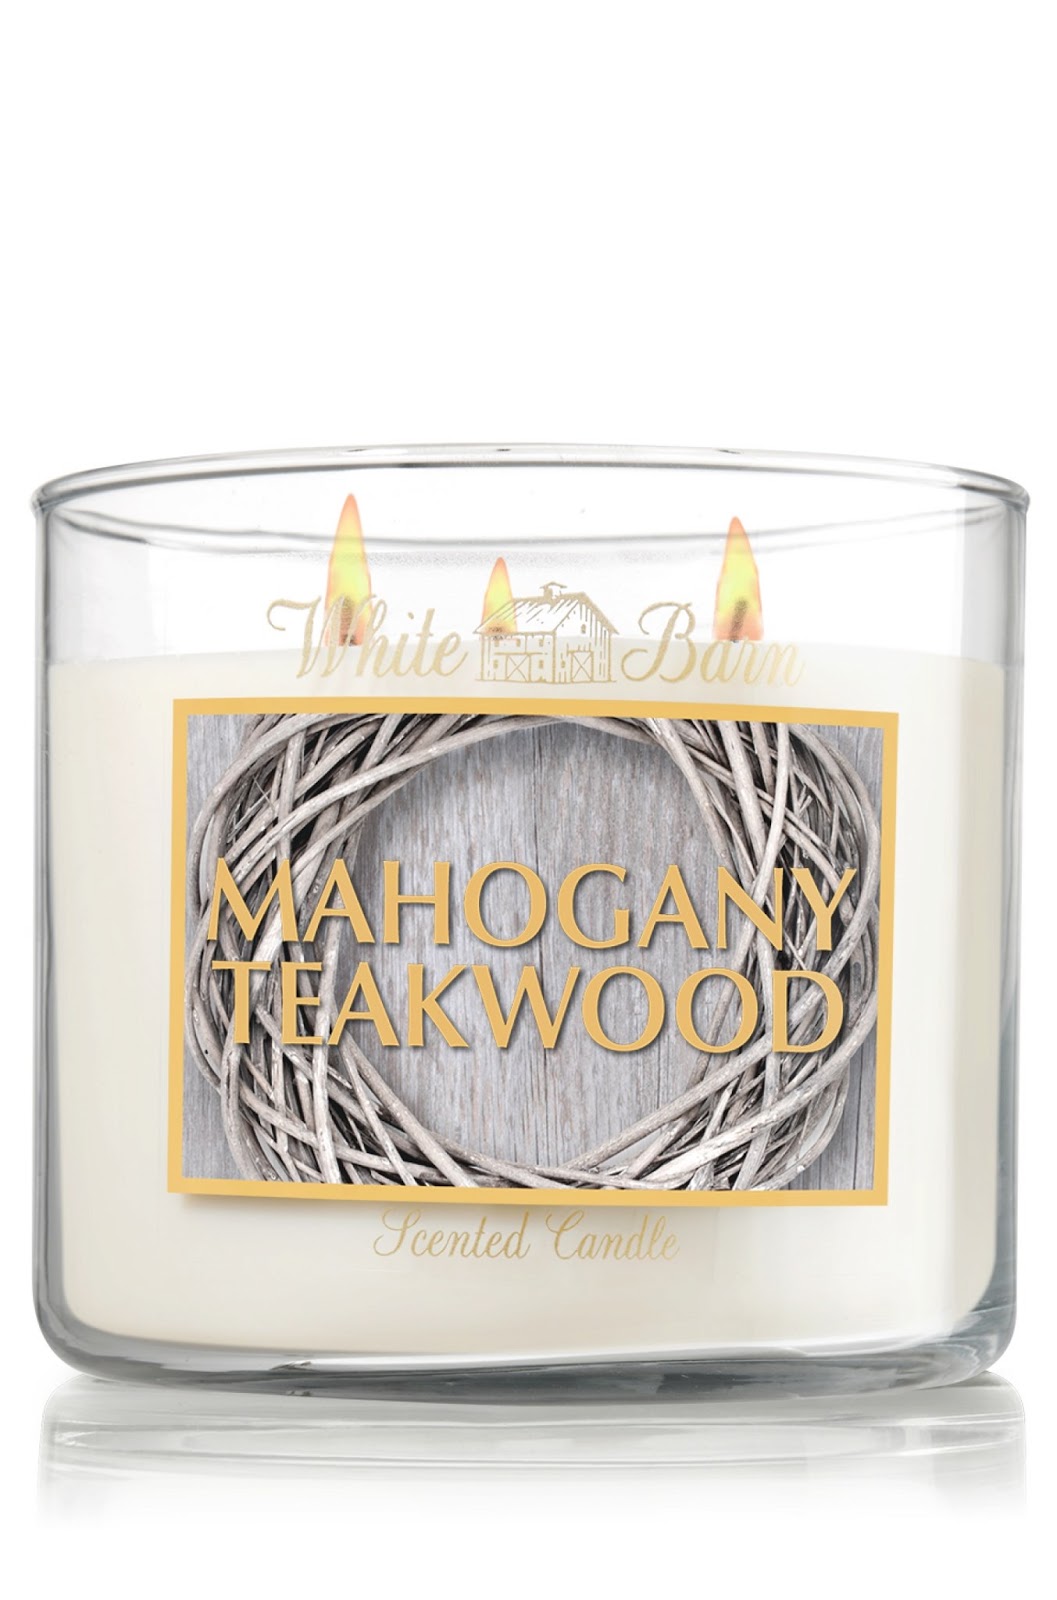 Mahogany Teakwood Scented Candles